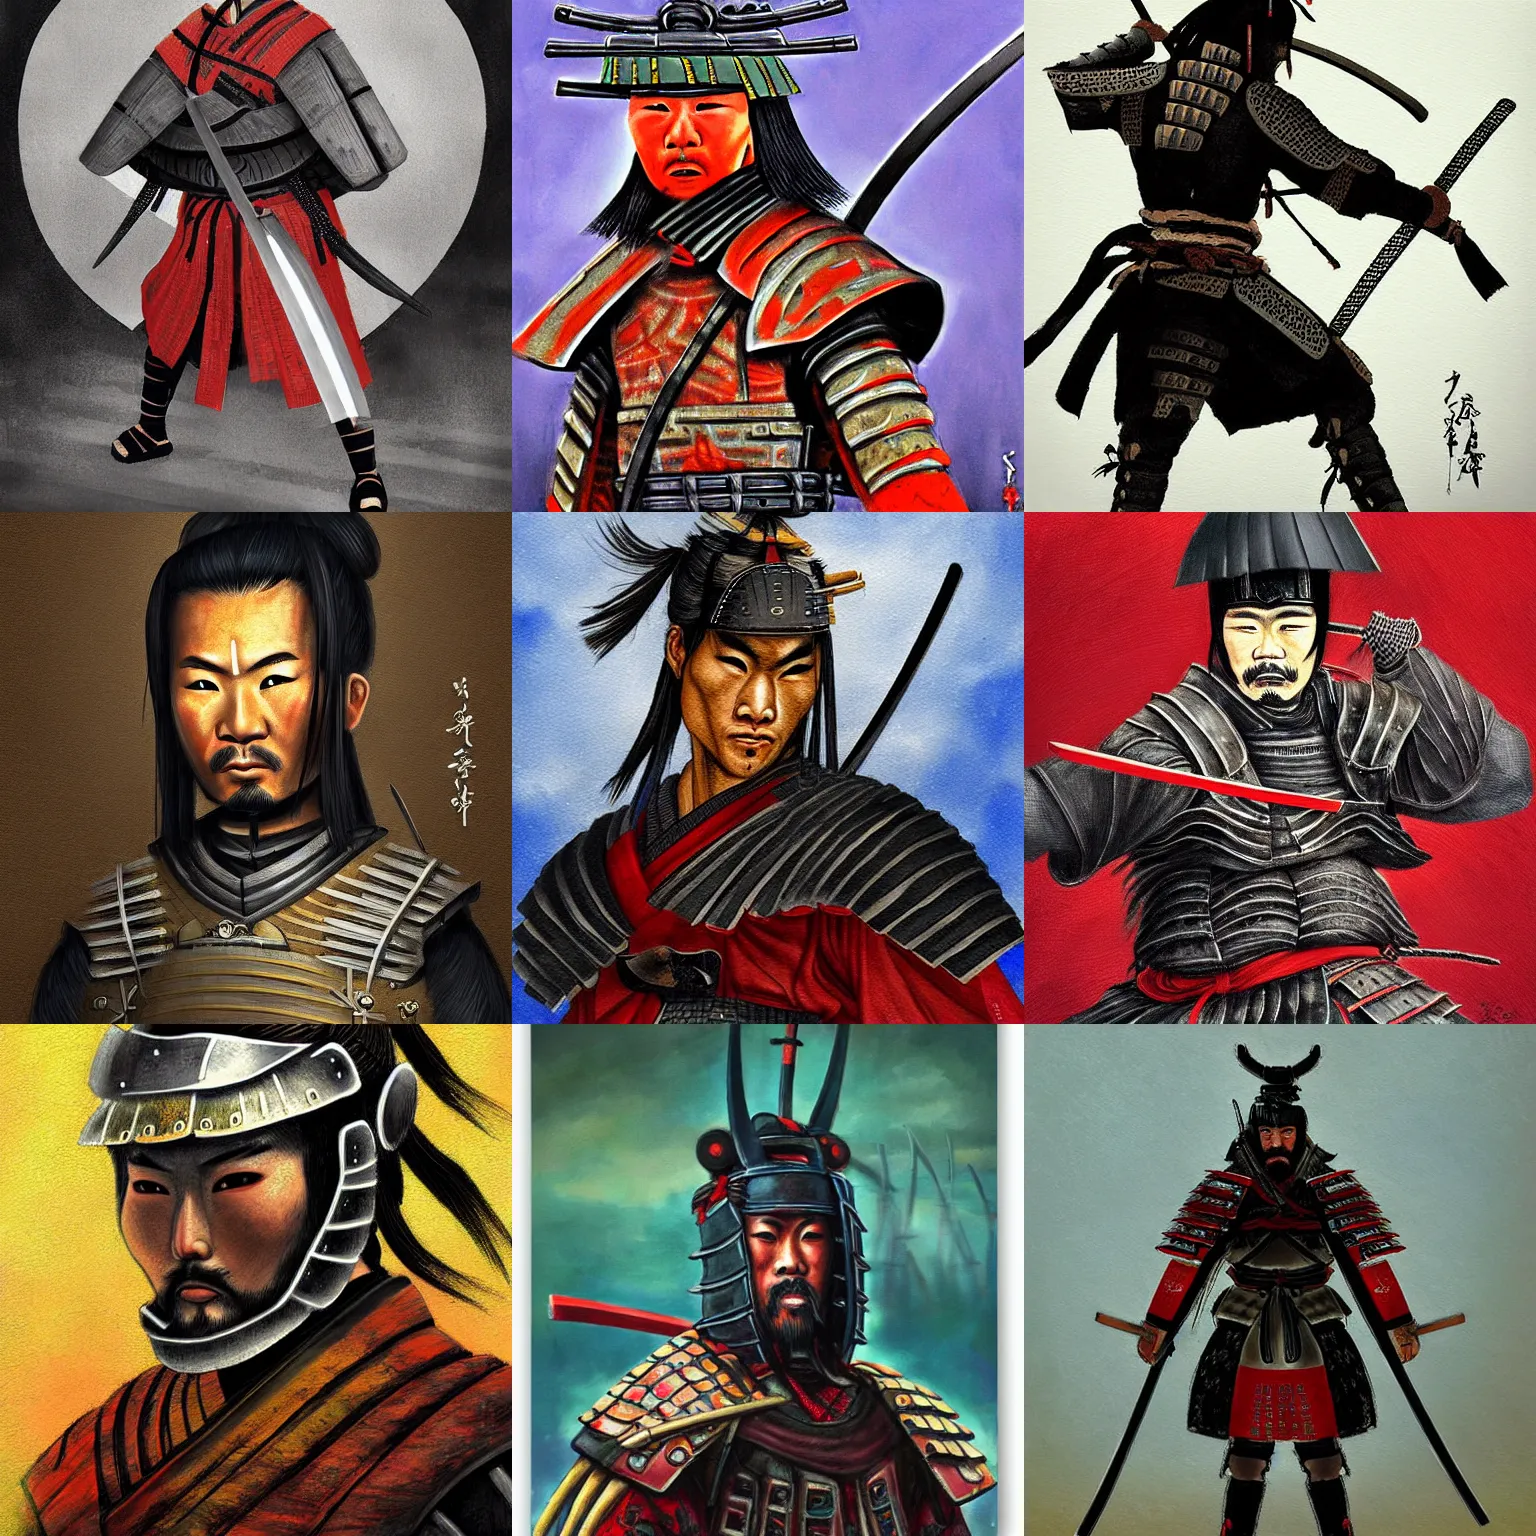 Prompt: samurai warrior, art by grzegorz rosinski